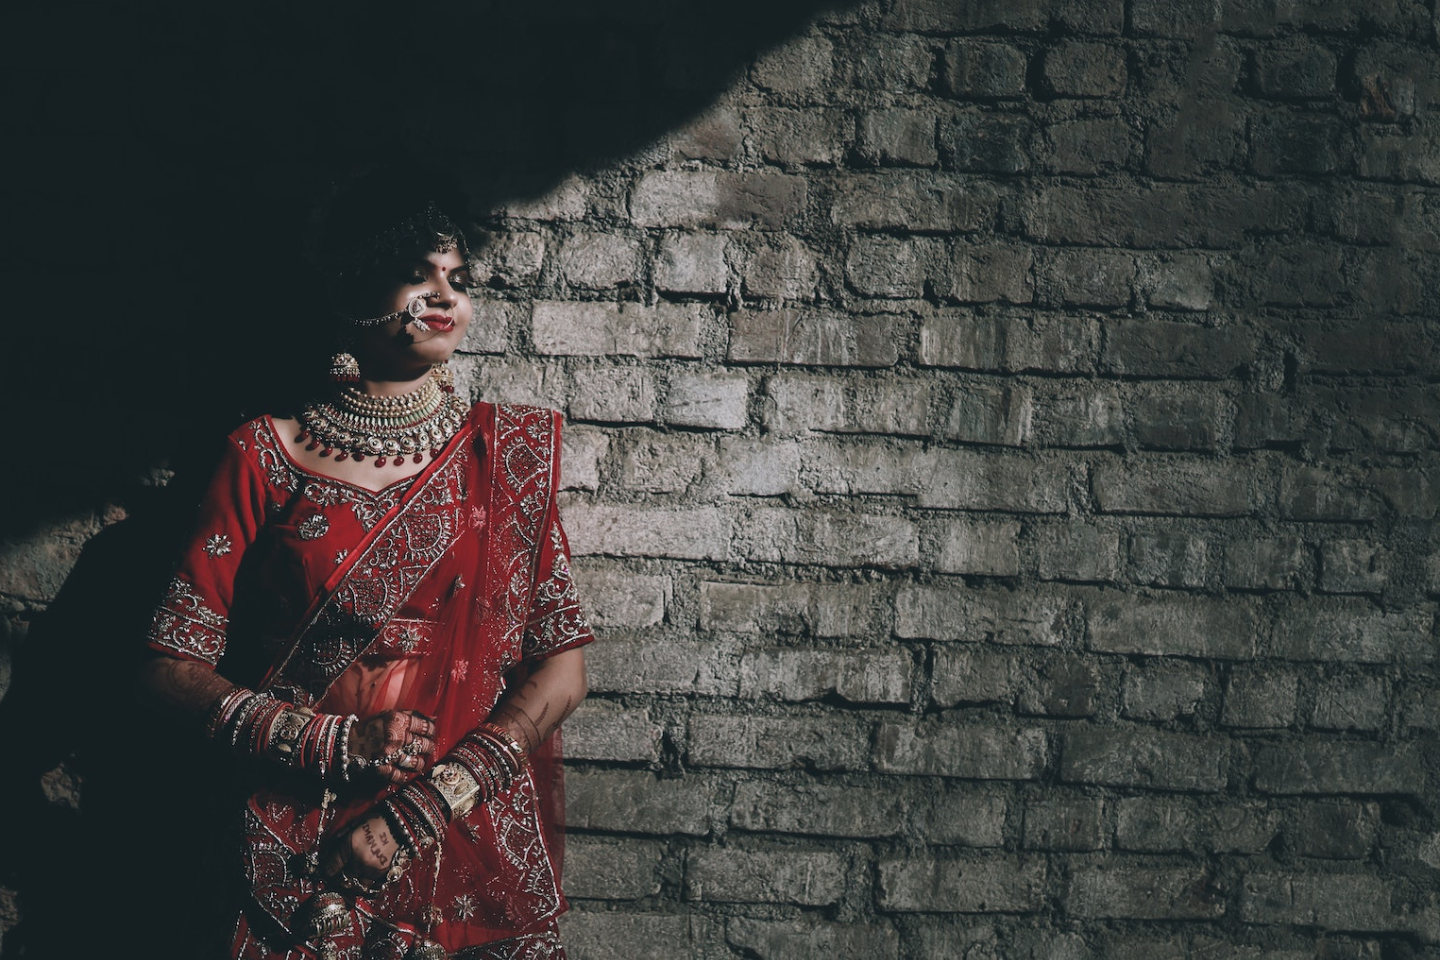 preethi and mitesh - The Indian Wedding Blog and Magazine